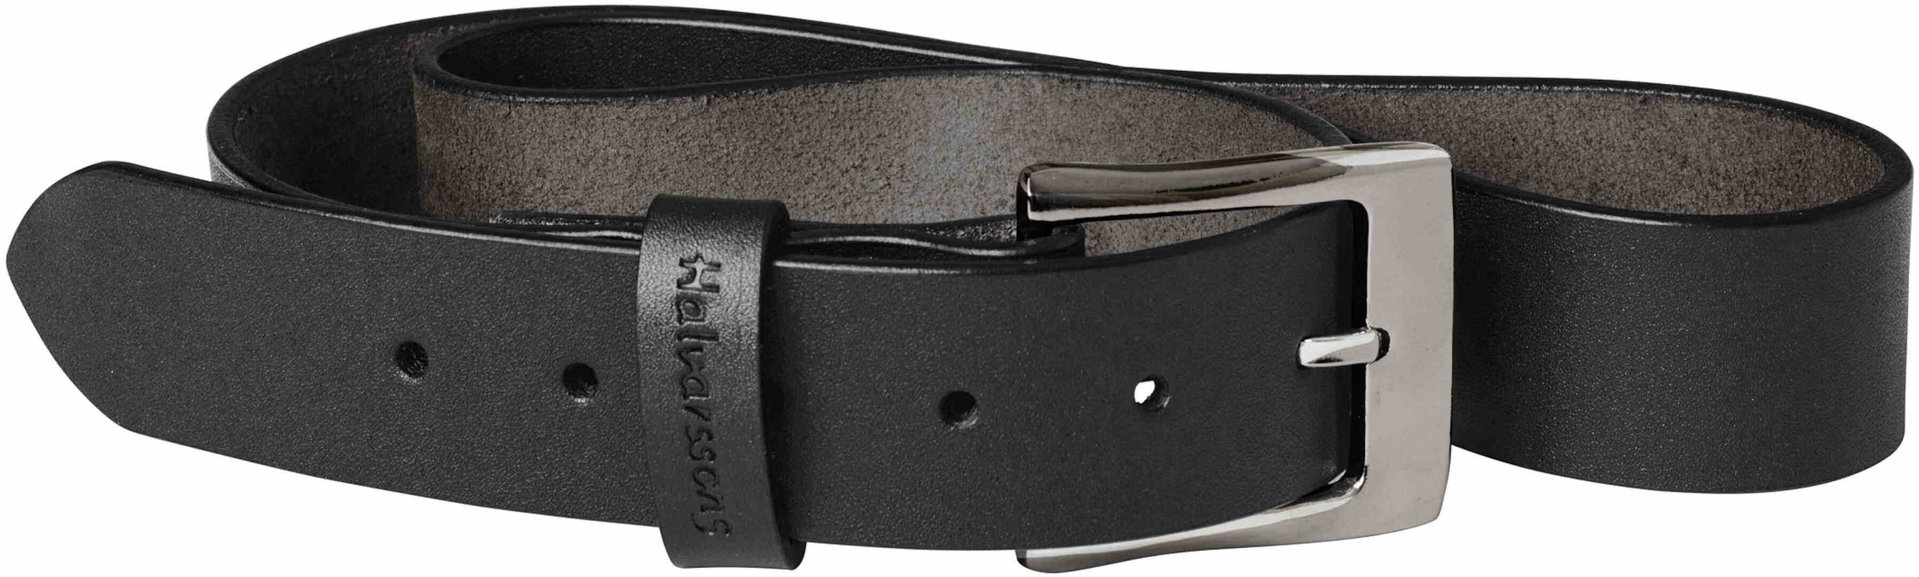 Image of Halvarssons Leather Cintura, nero, dimensione M